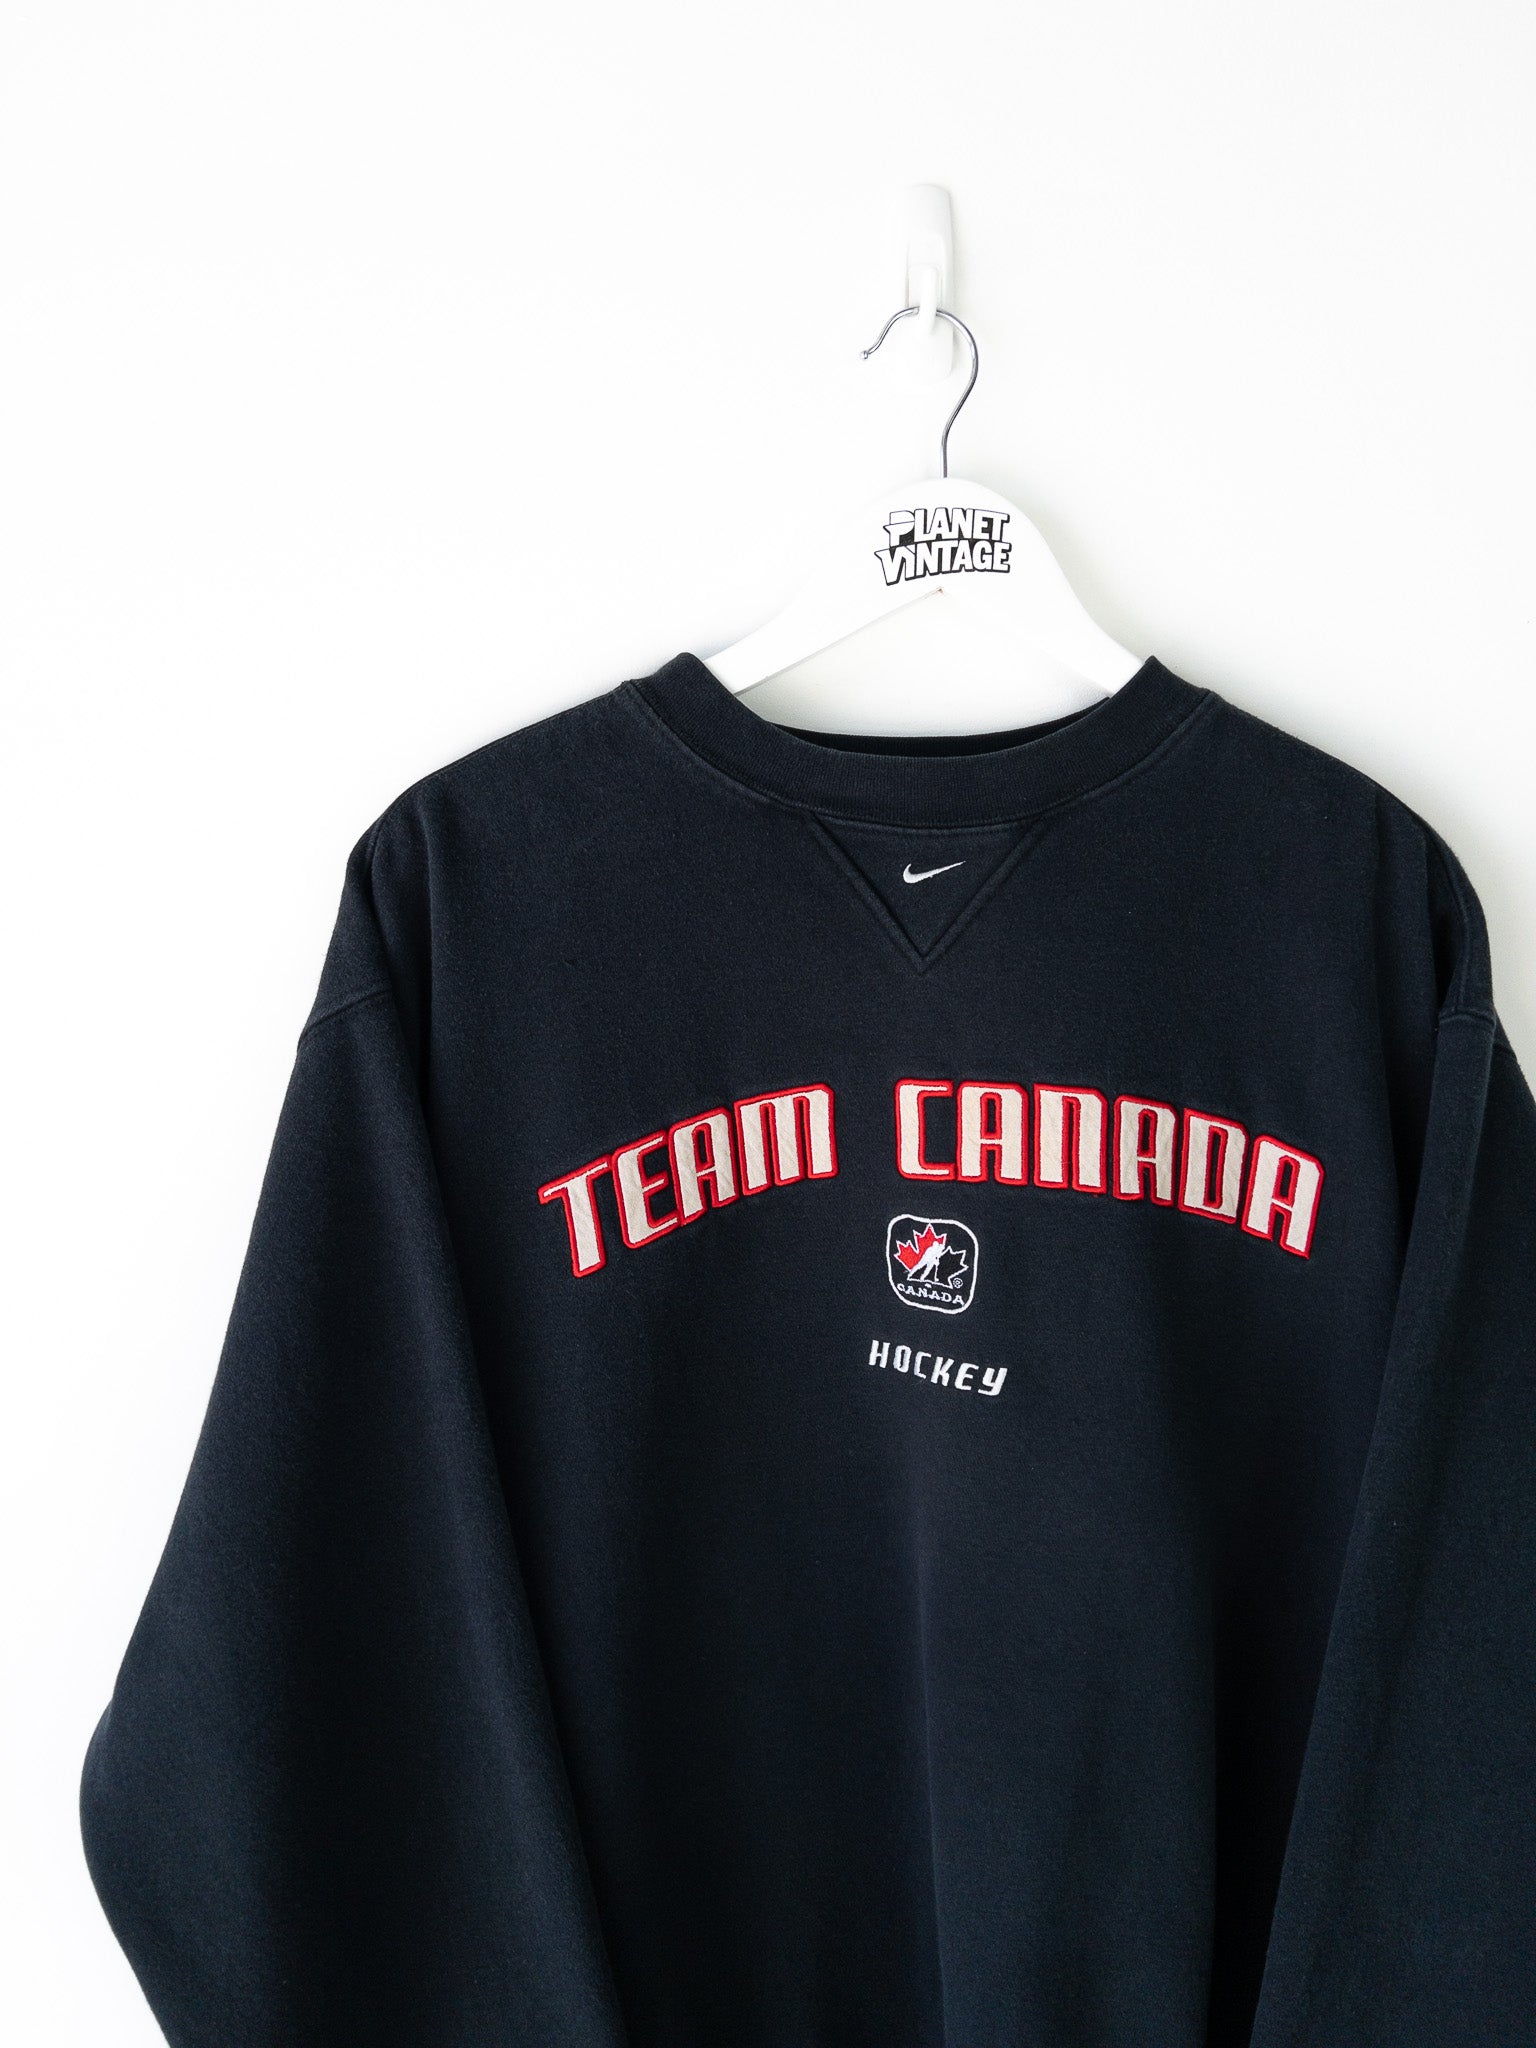 Vintage Team Canada Nike Sweatshirt (L)